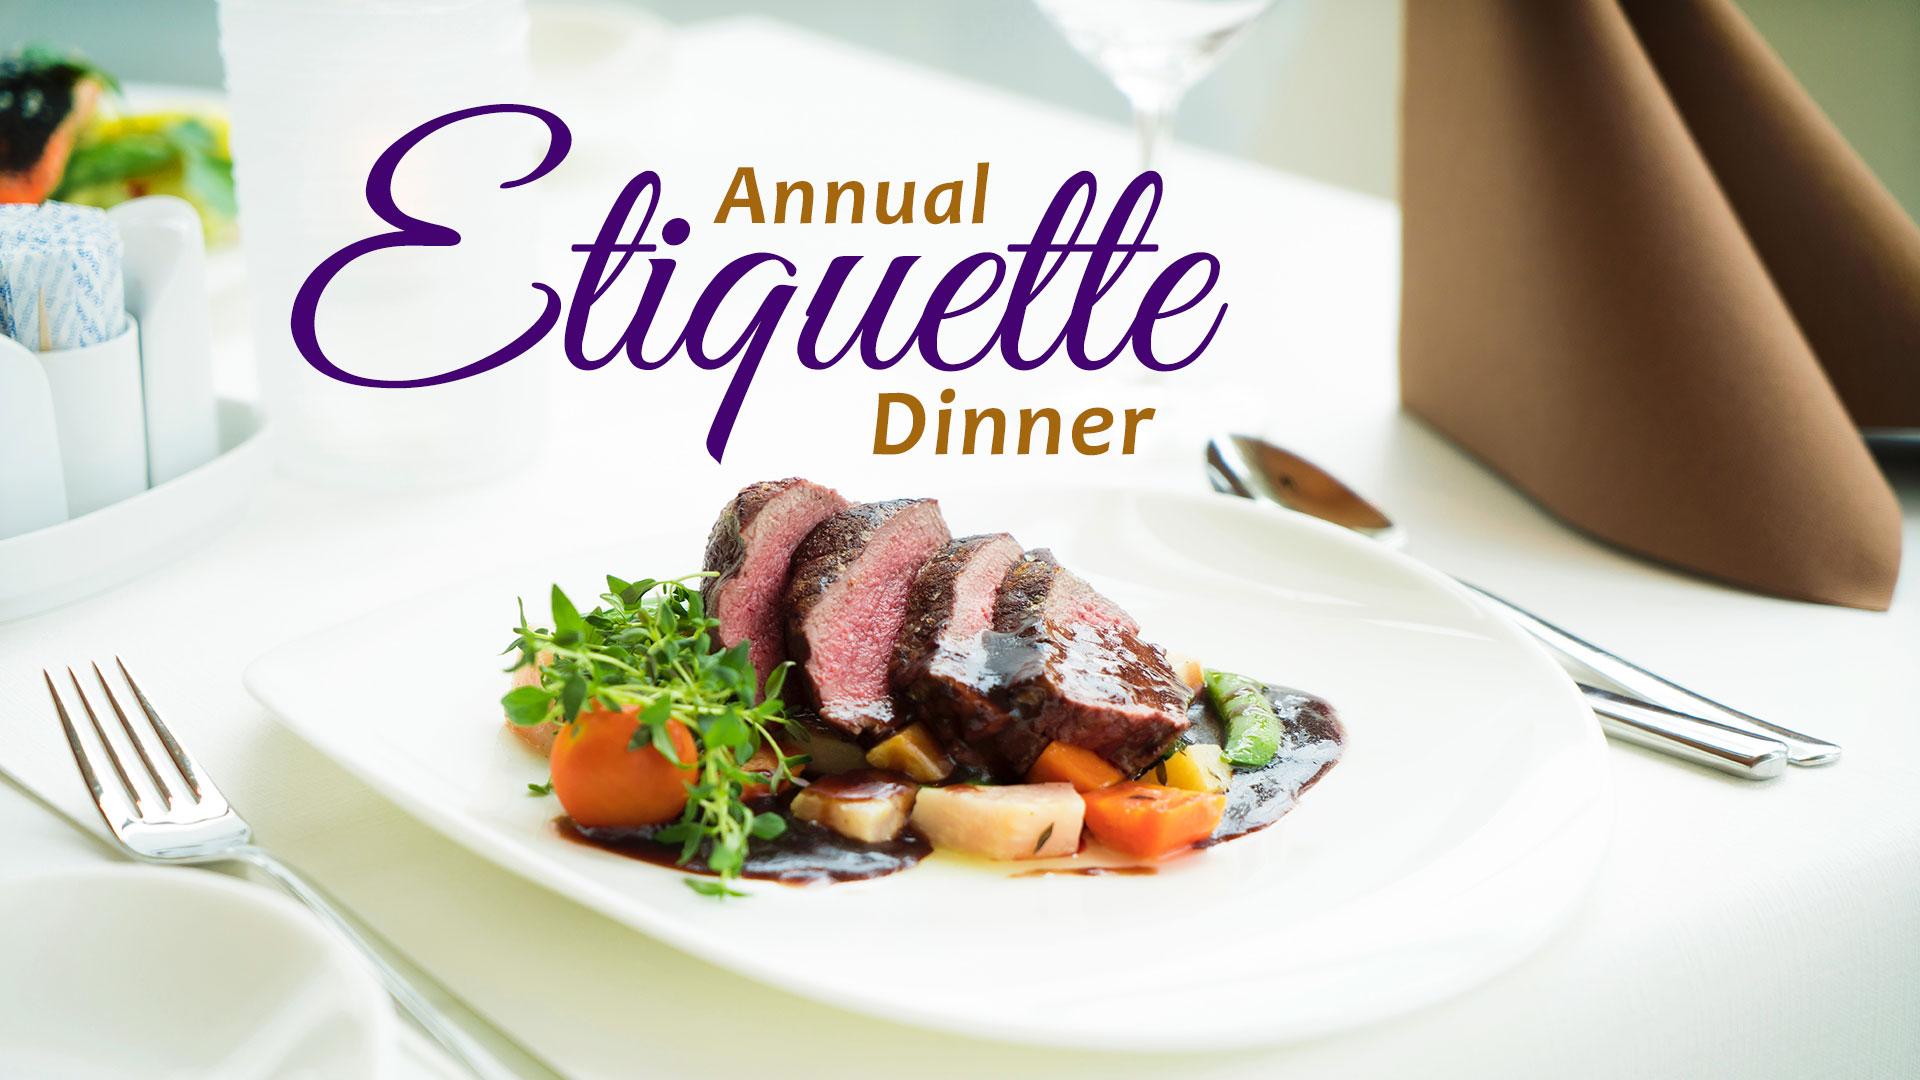 Annual Etiquette Dinner